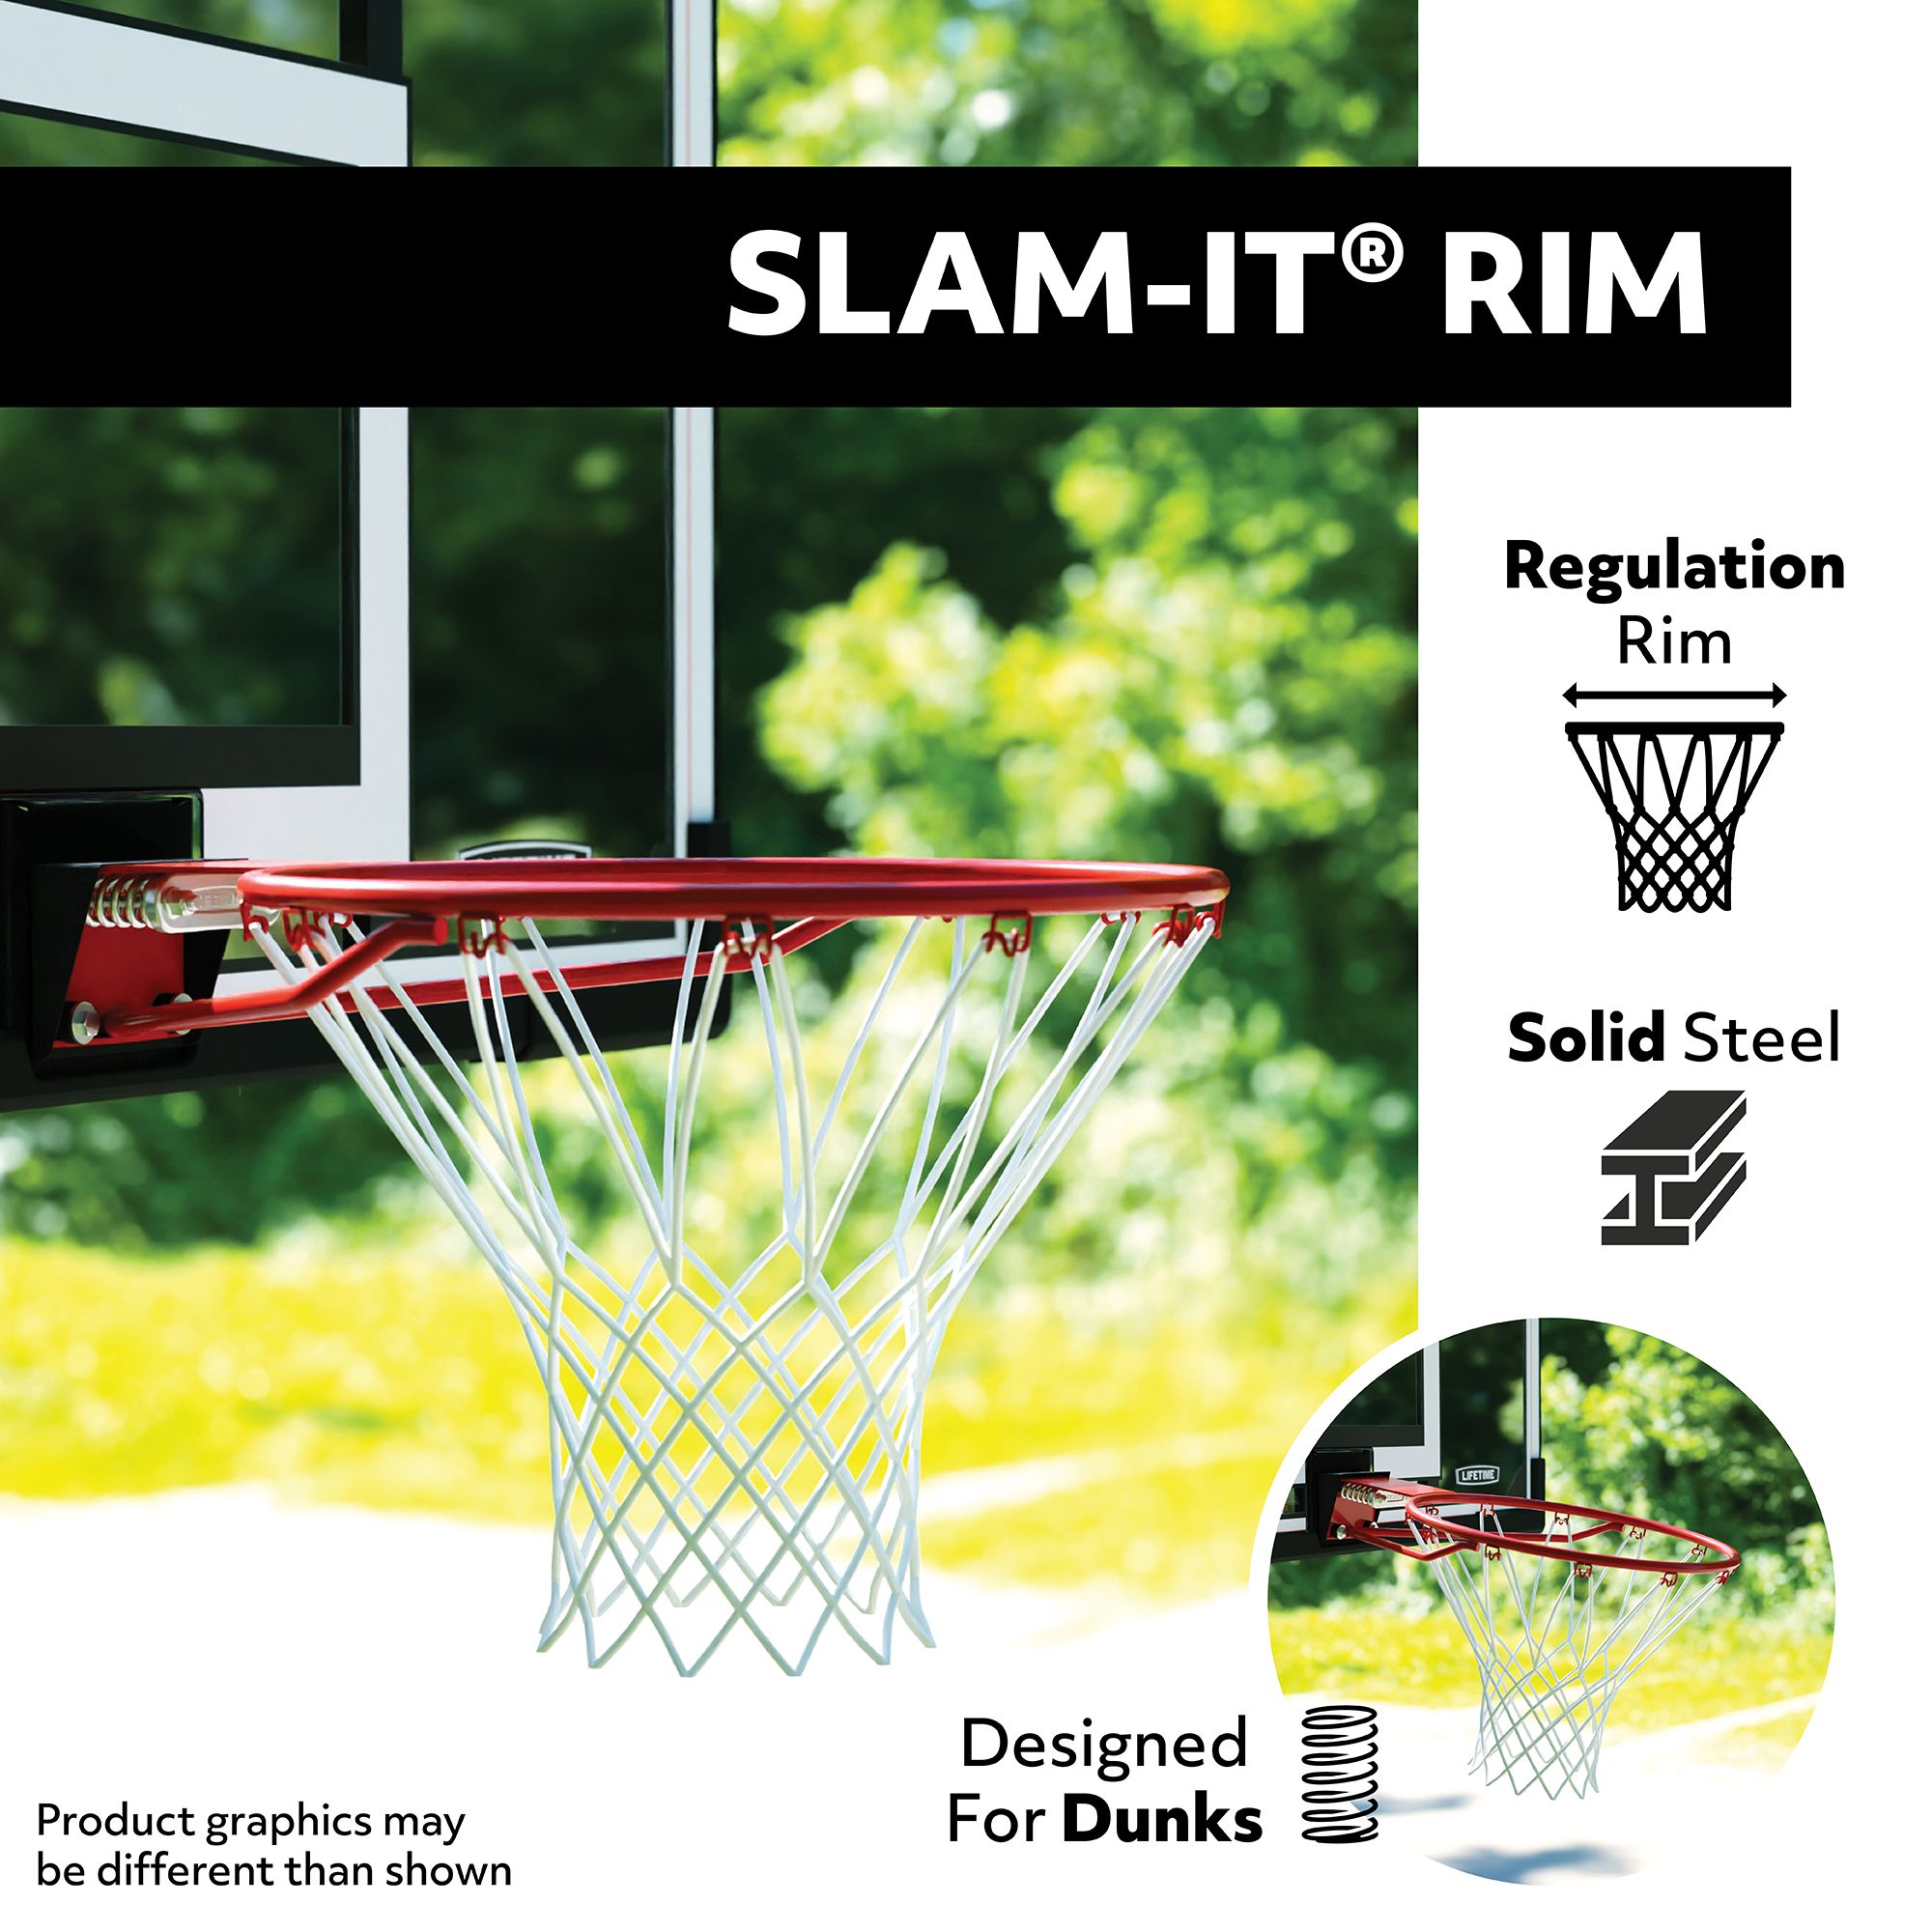 Lifetime 50” All Star Portable Basketball Hoop